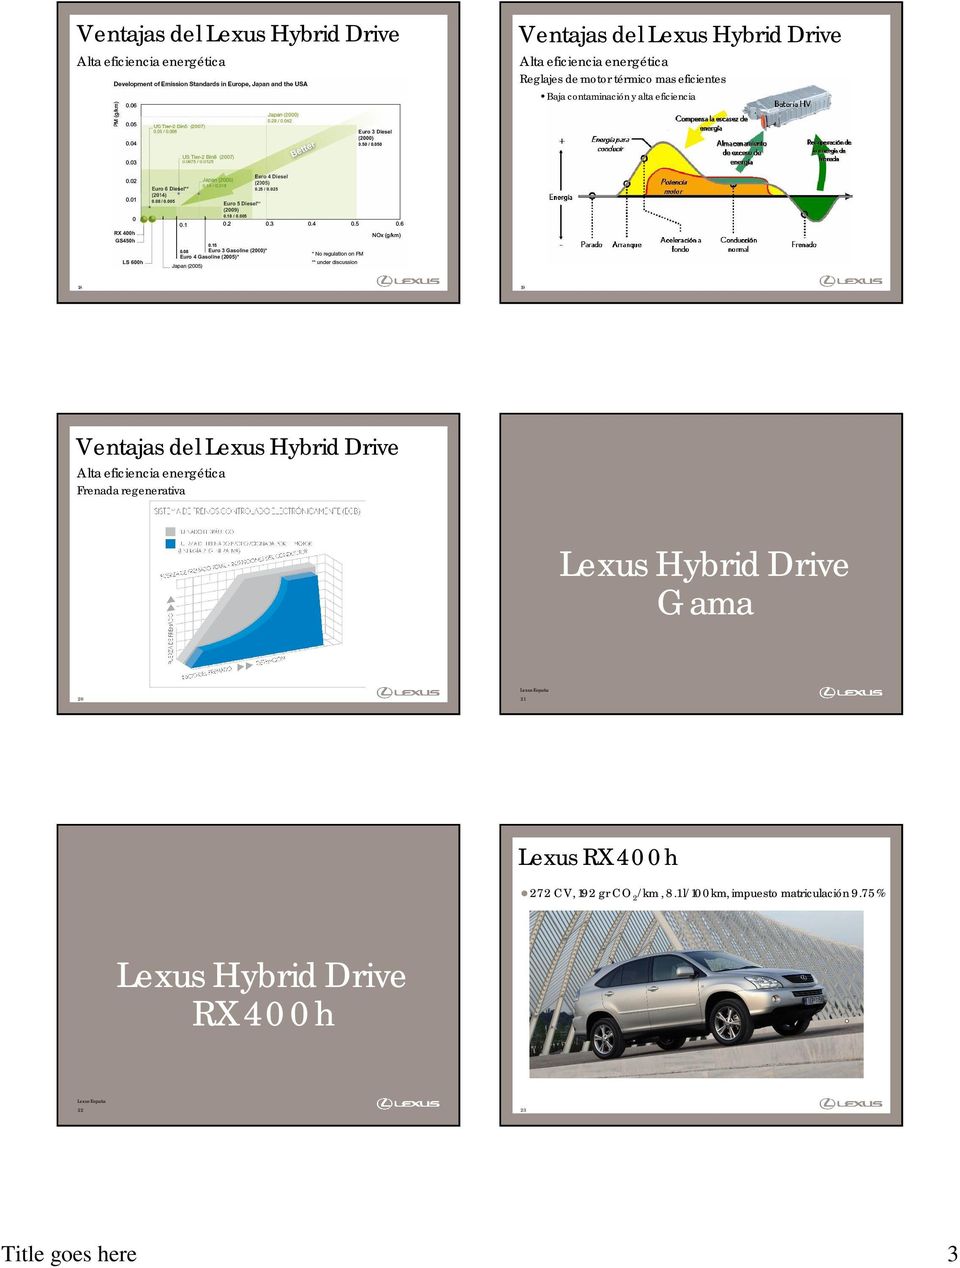 Ventajas del Alta eficiencia energética Frenada regenerativa Gama 20 21 Lexus RX400h